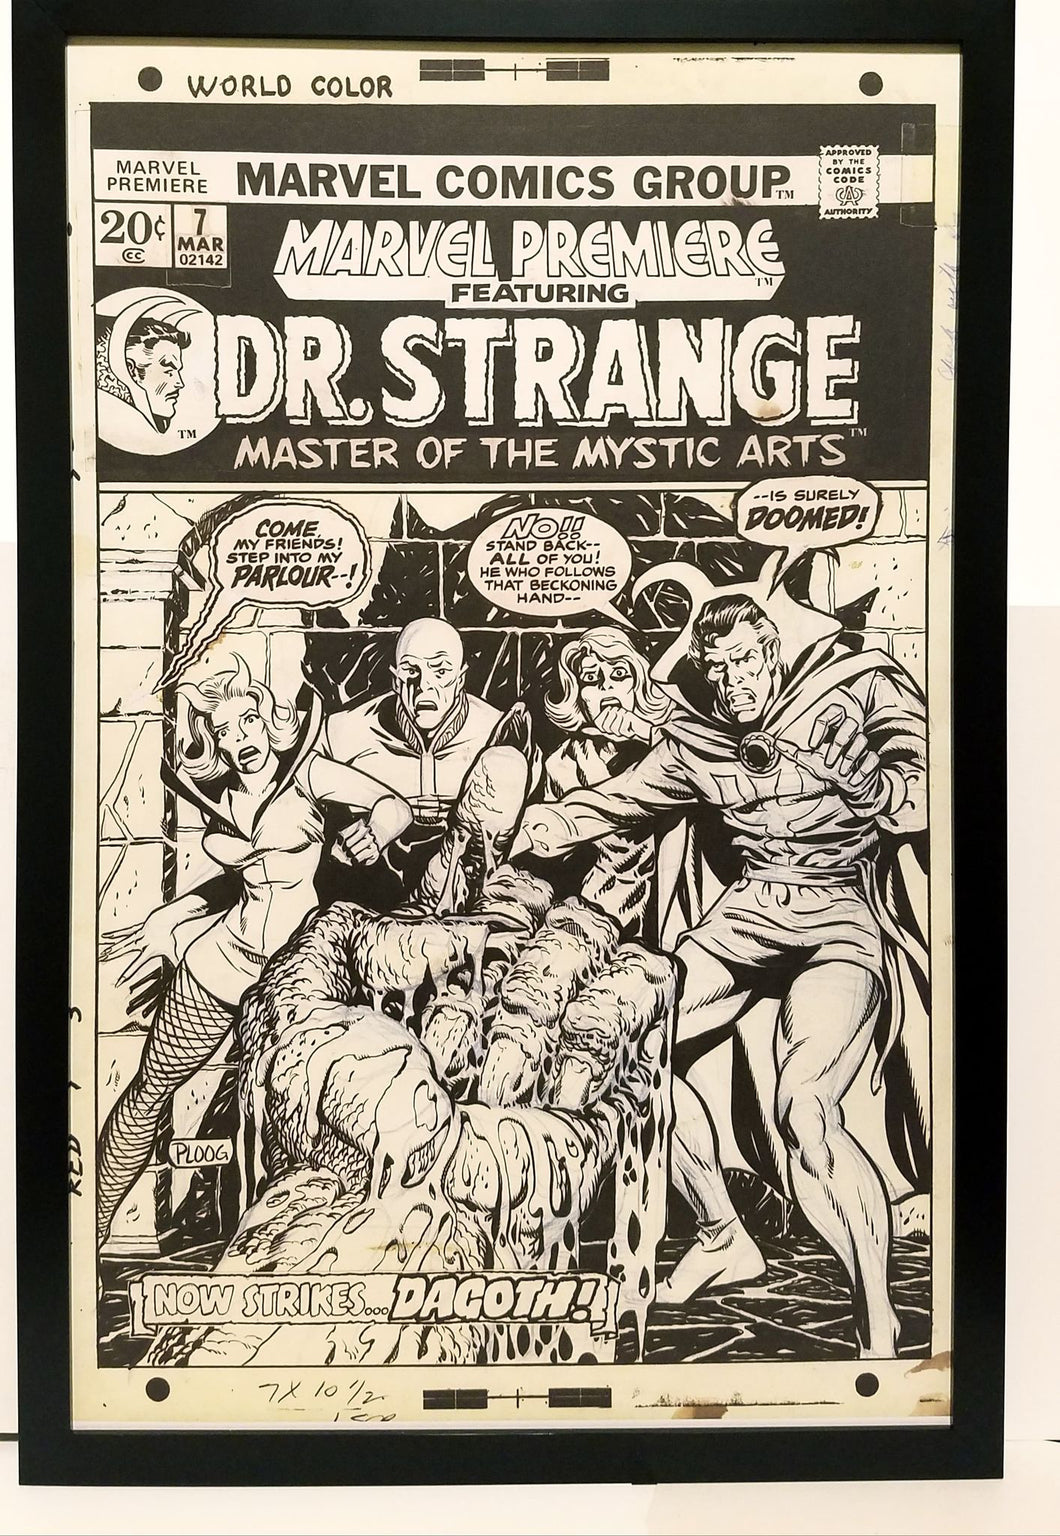 Marvel Premiere #7 Doctor Strange 11x17 FRAMED Original Art Poster Comics